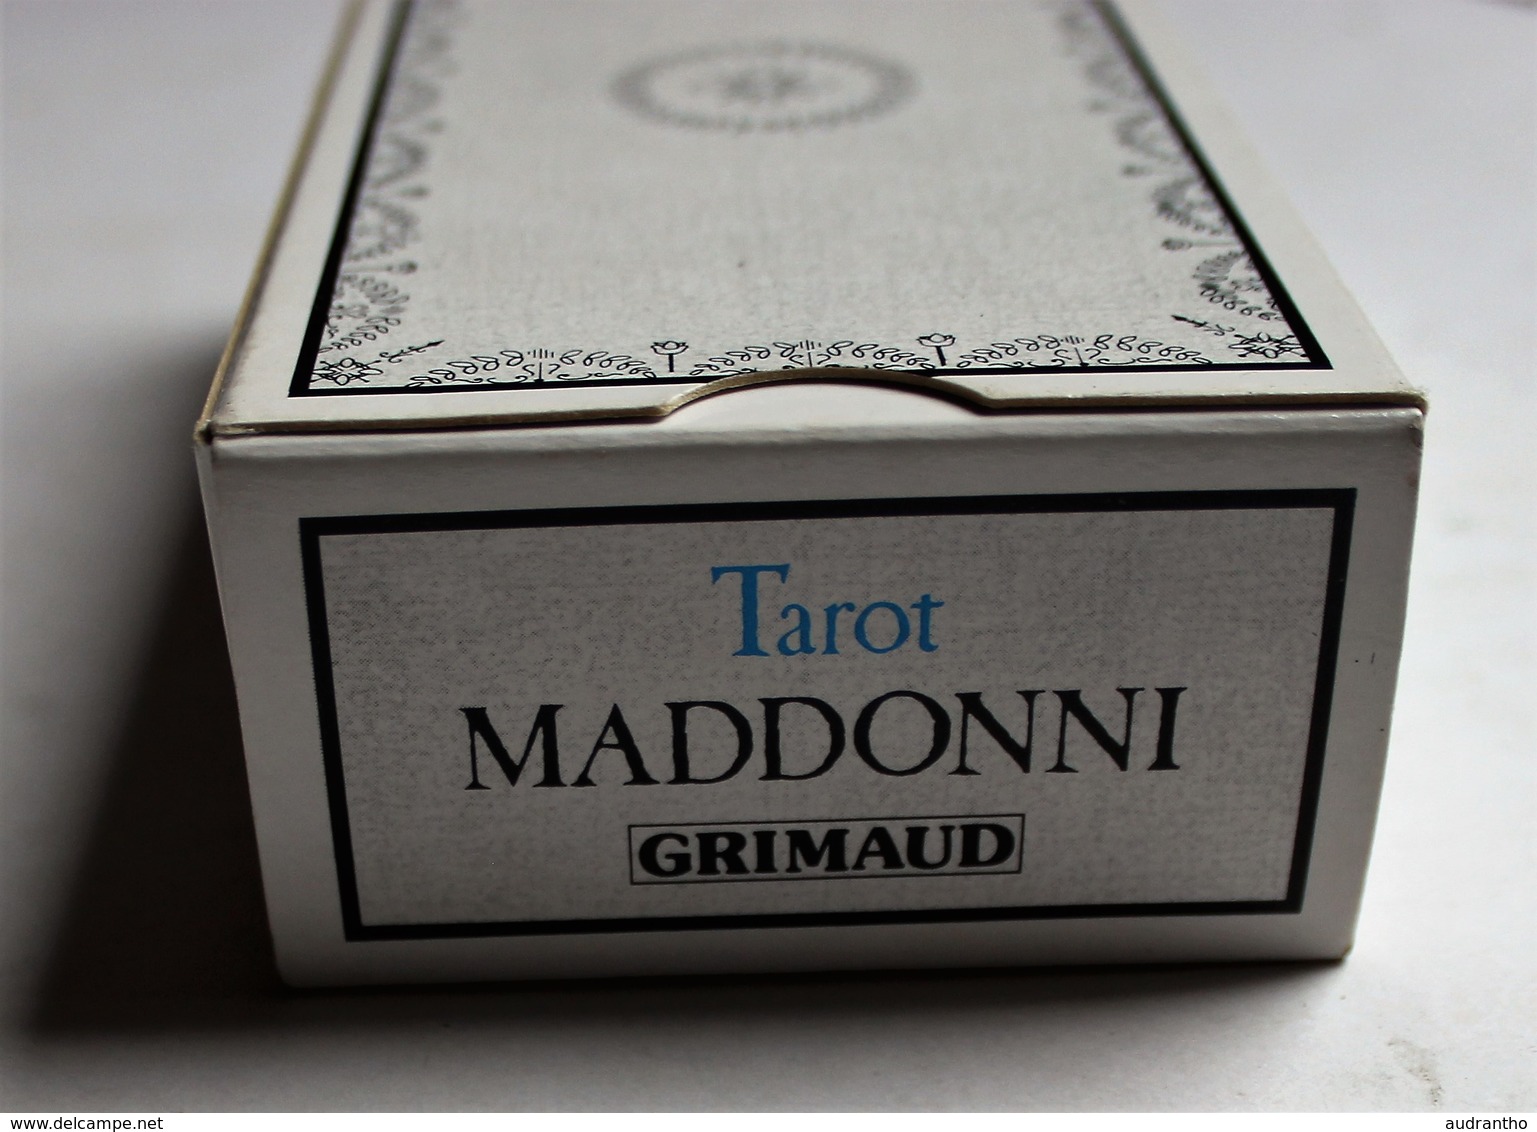 Jeu de Tarot Silvia Maddonni 1981 Grimaud inspiré du Tarot de Marseille jeu de cartes